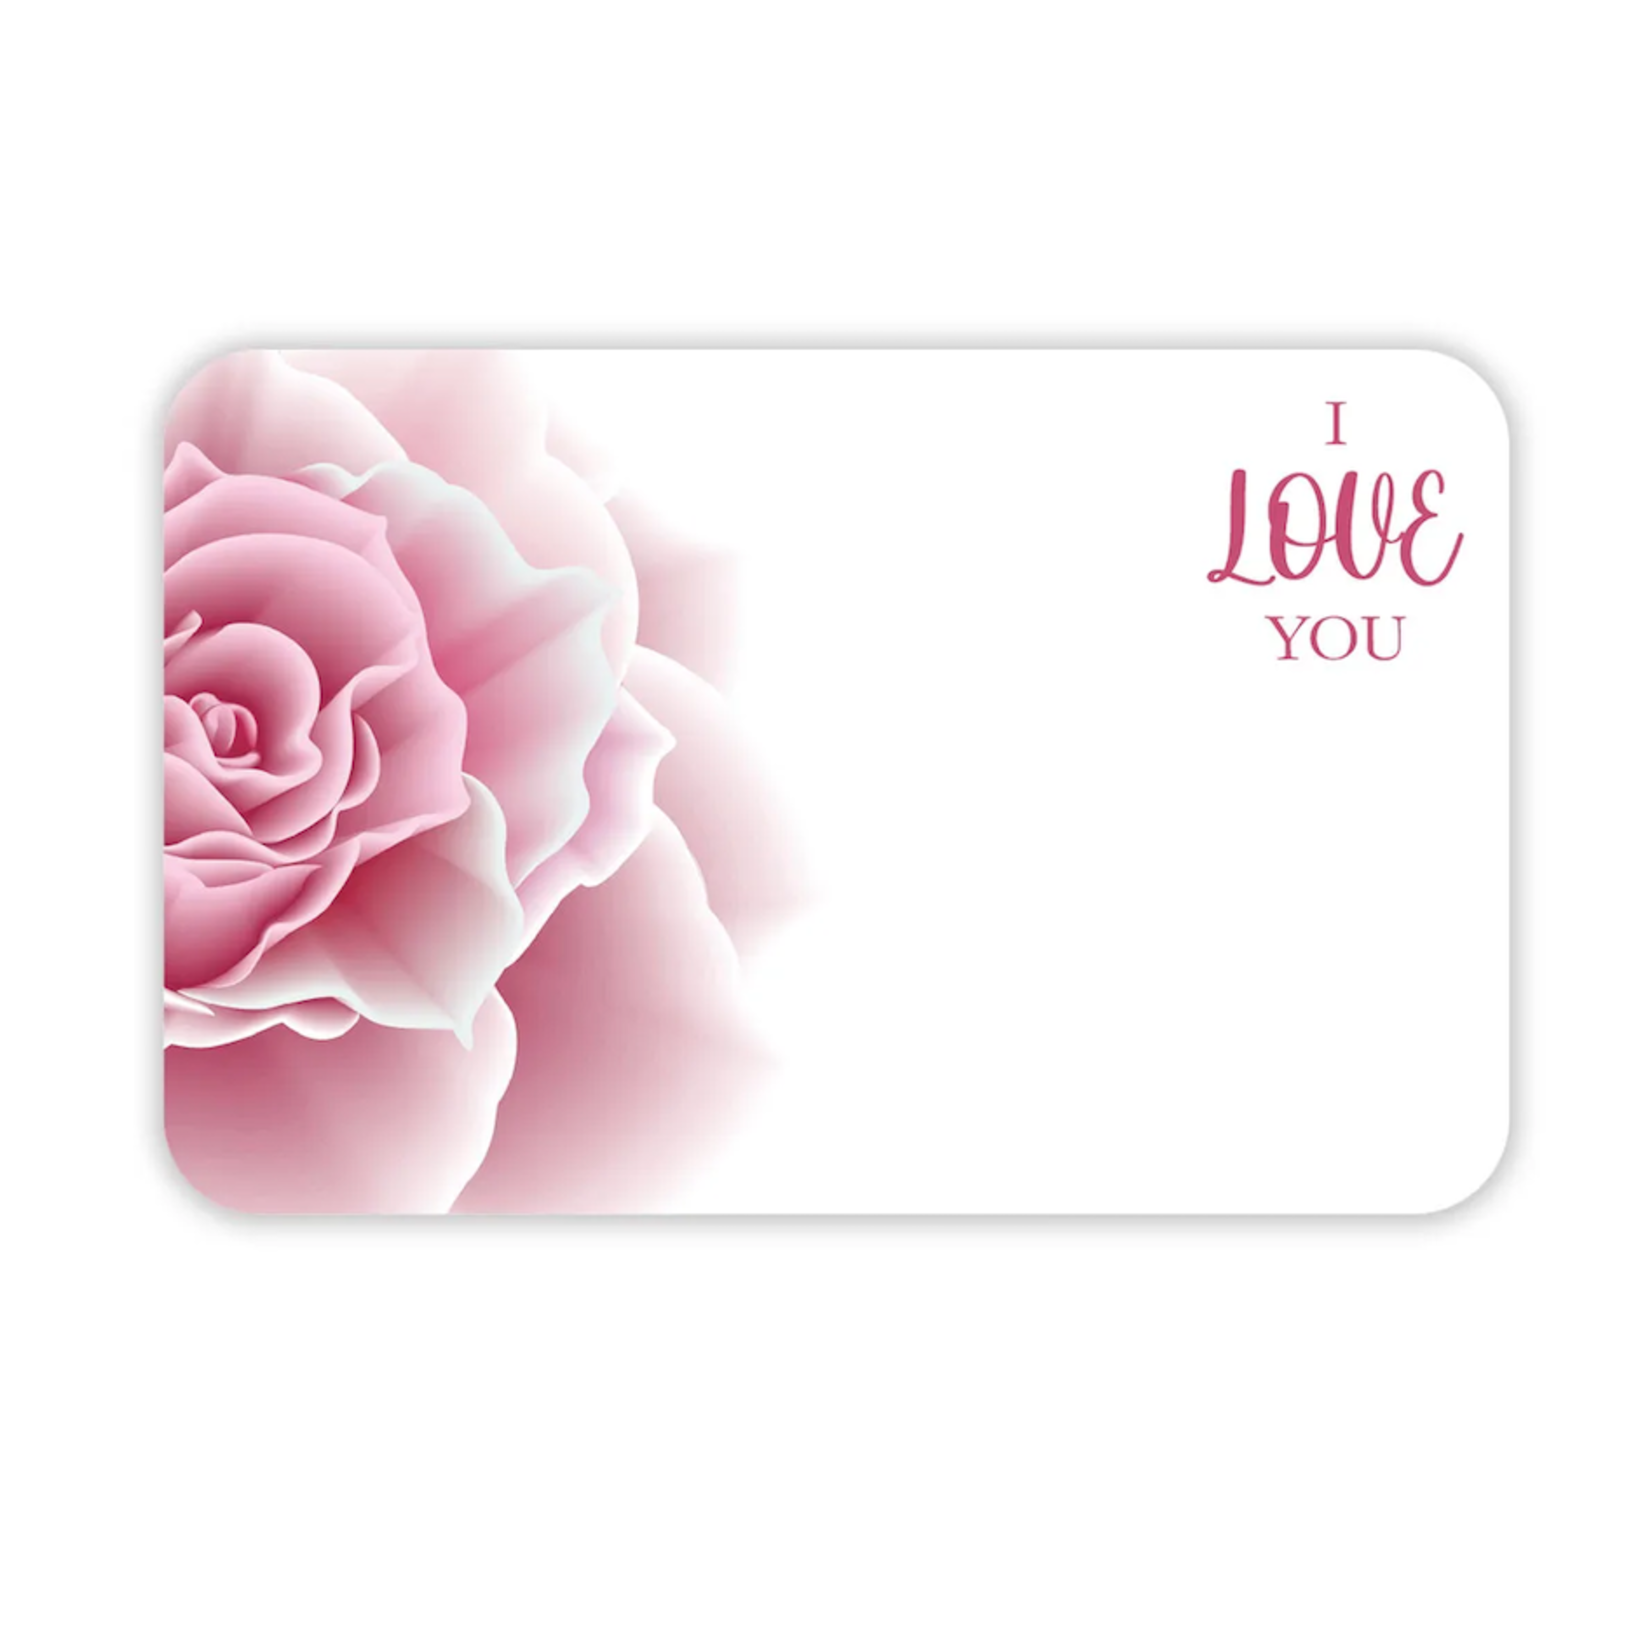 "I LOVE YOU" PINK FLOWER CAPRI CARD